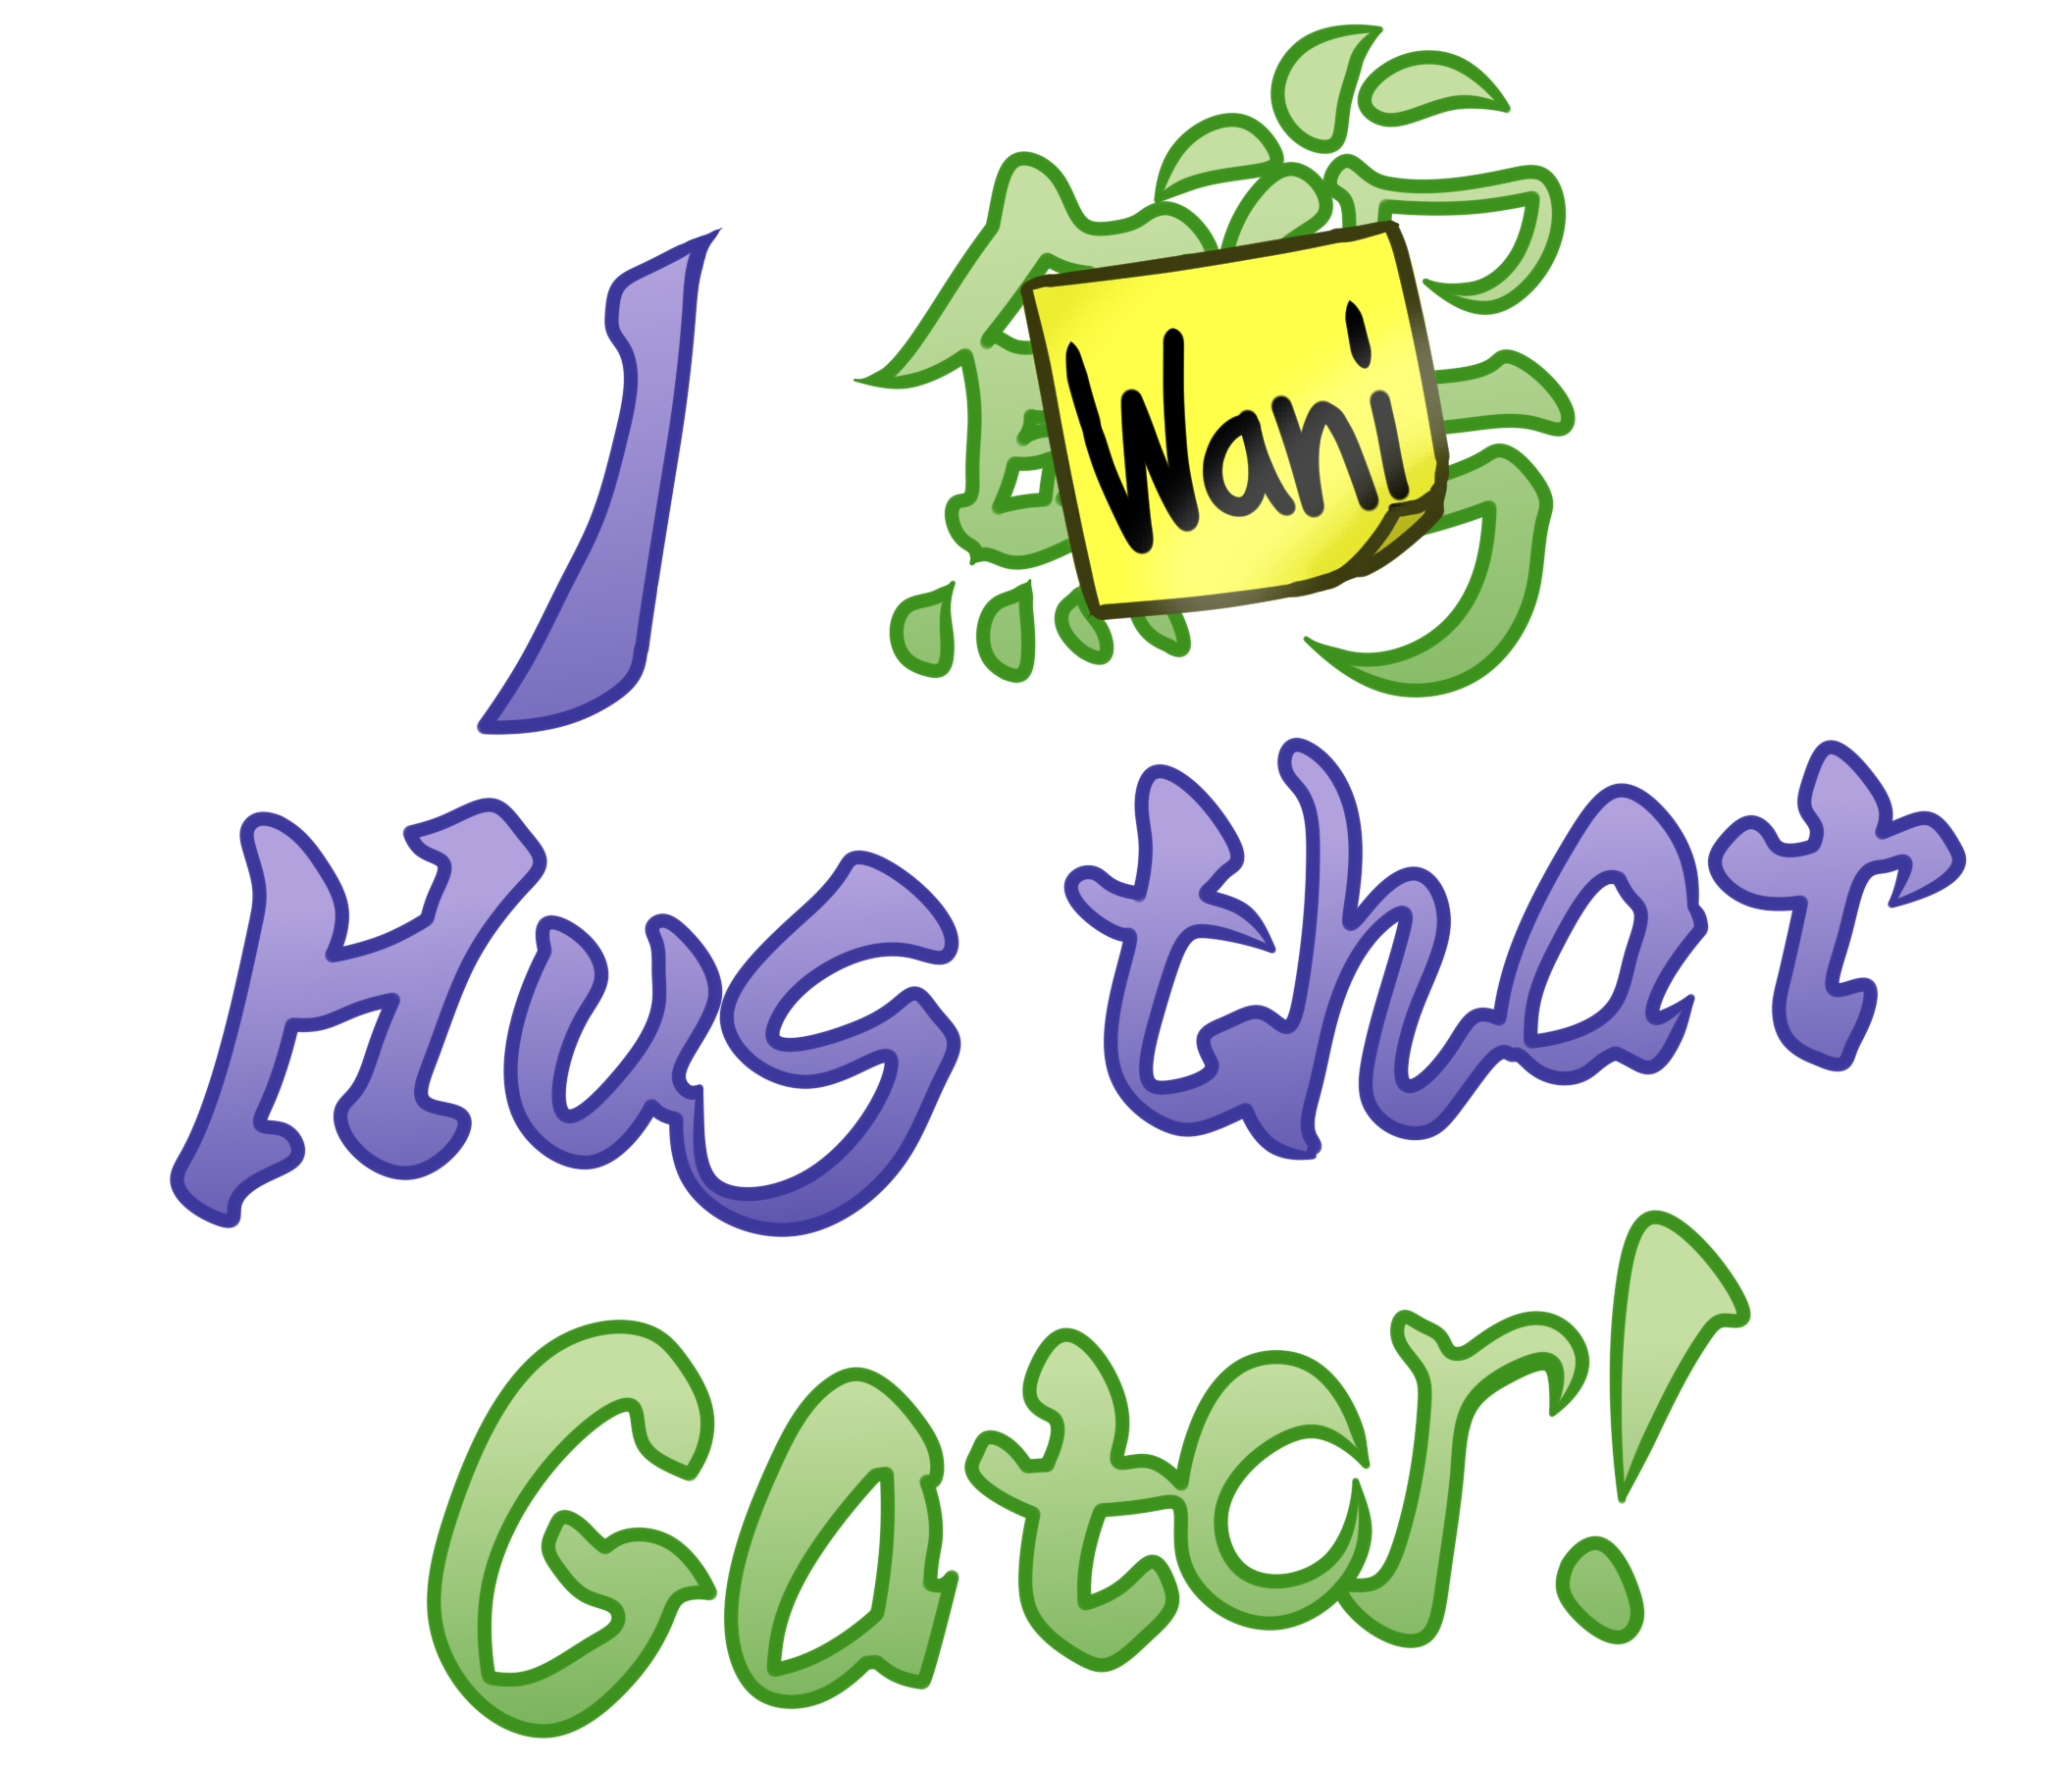 I Wani Hug that Gator!